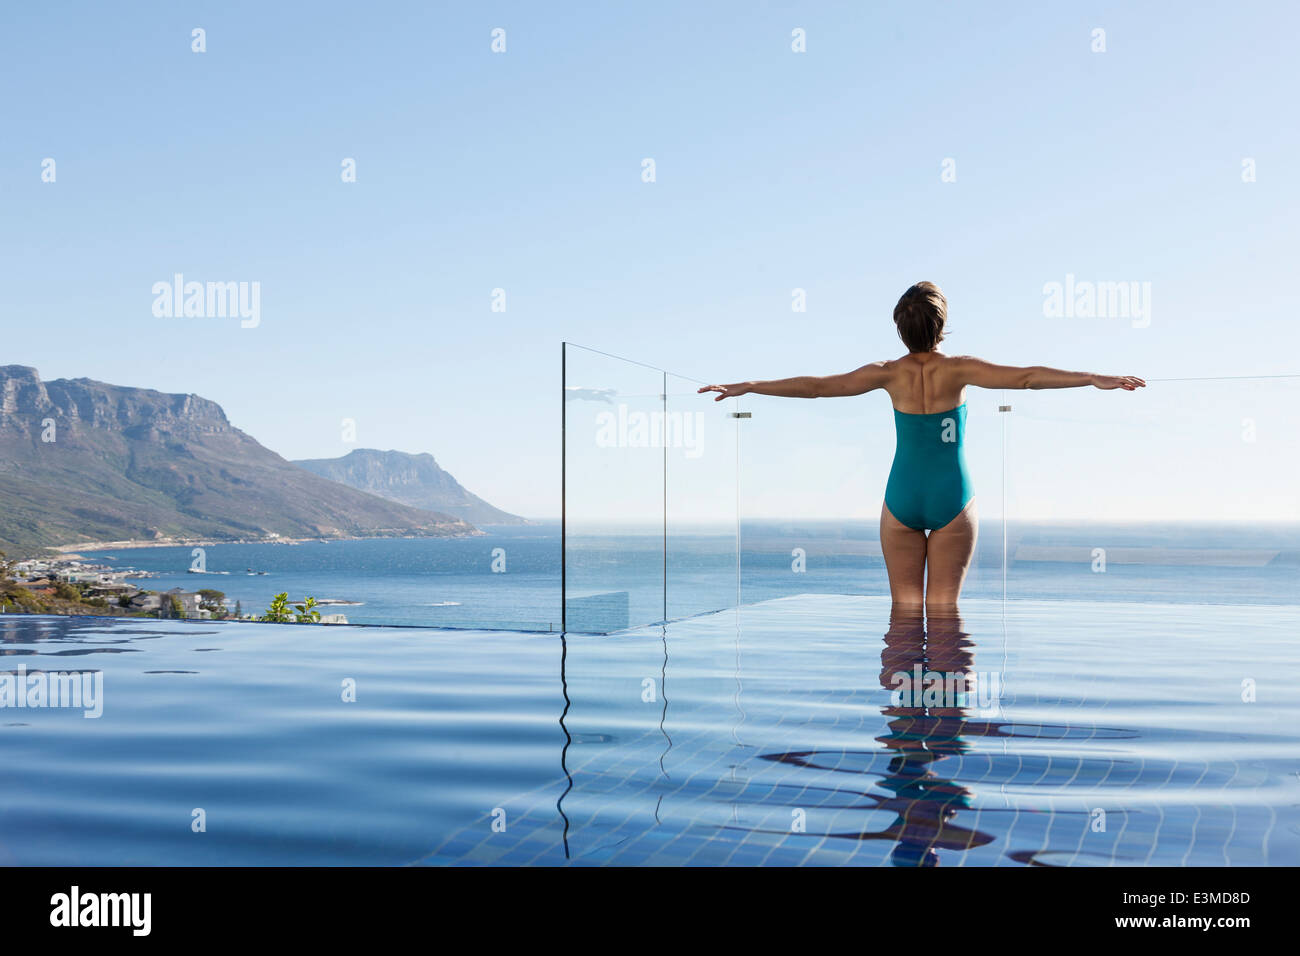 Woman basking in infinity pool overlooking ocean Stock Photo